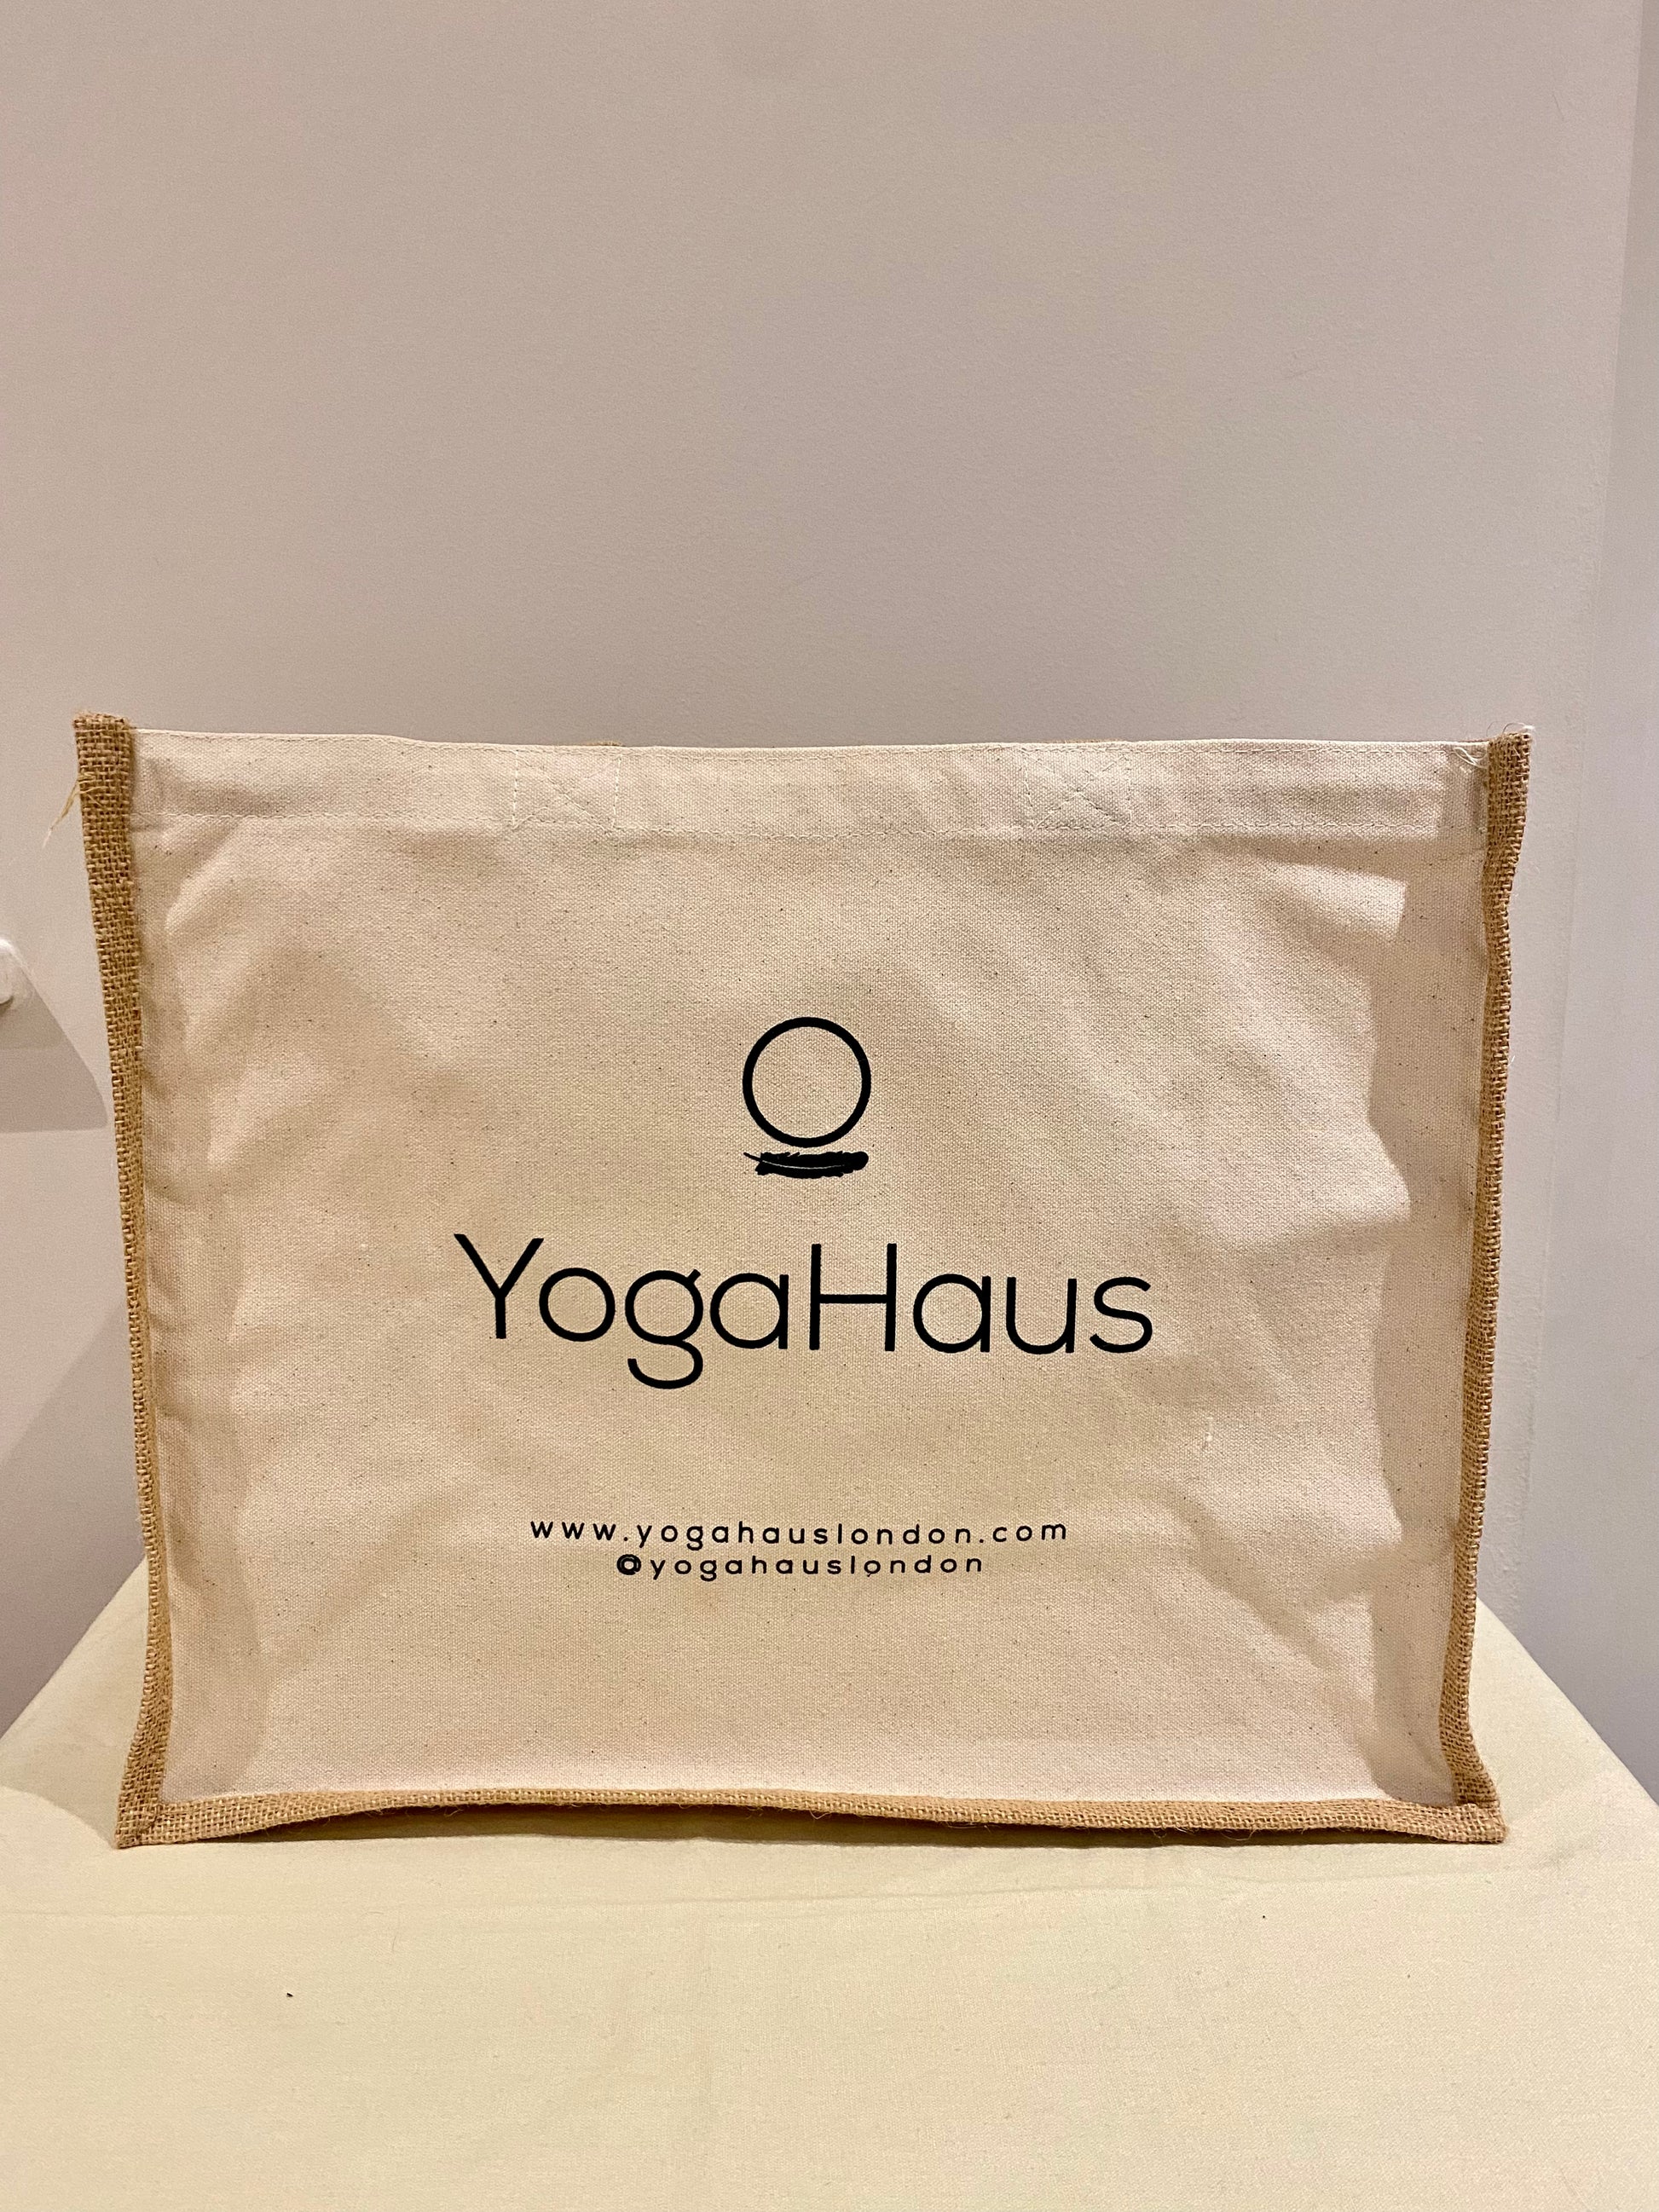 yoga bag london